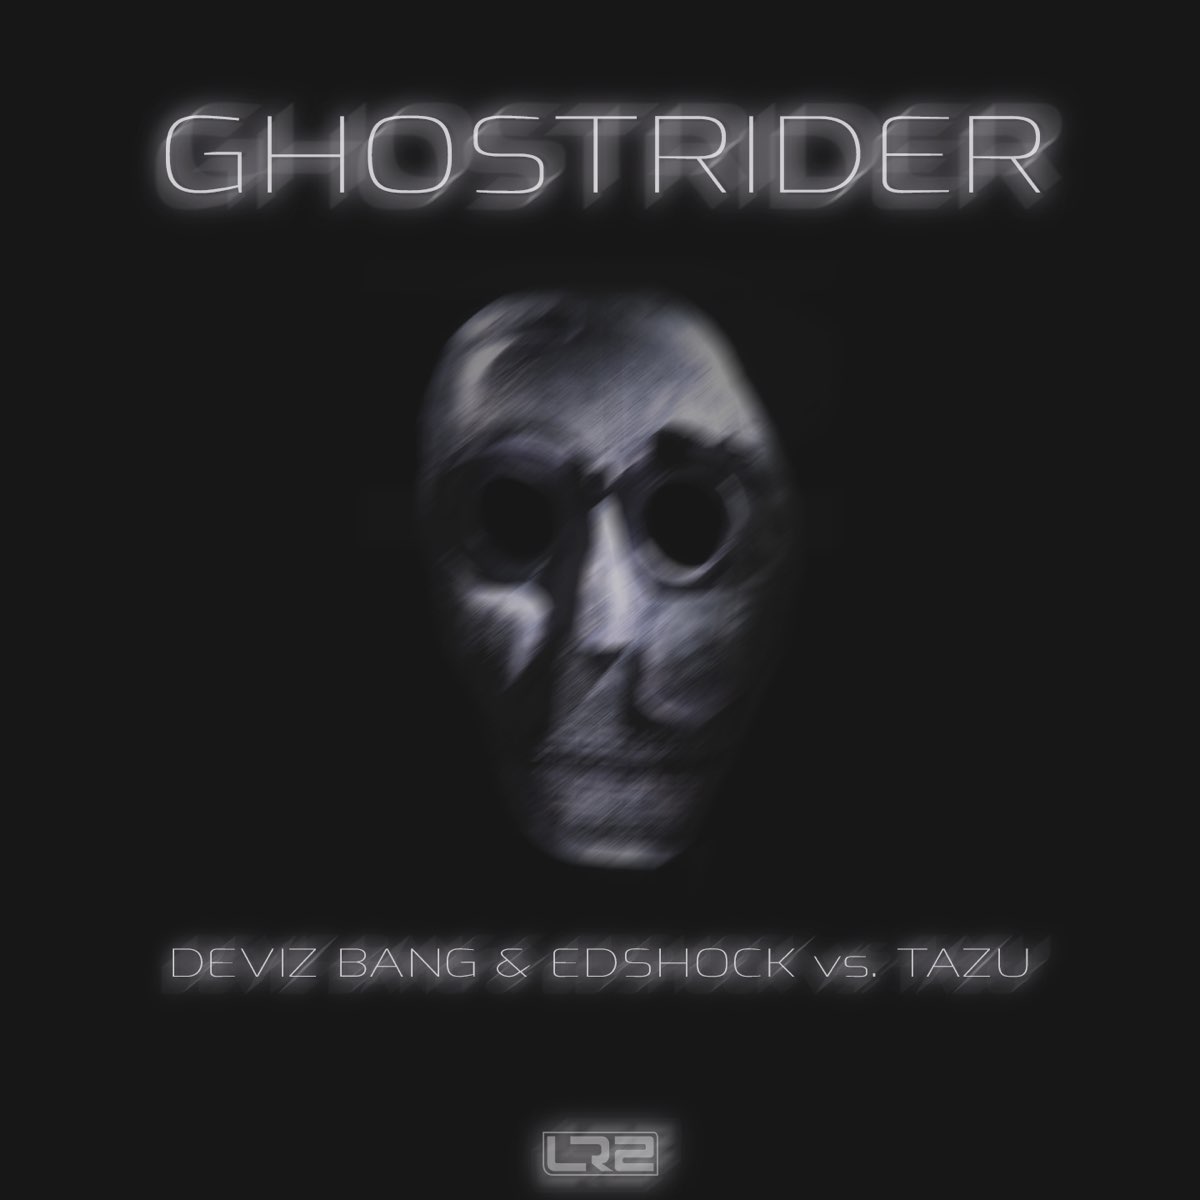 ‎Ghostrider - Single - Album by Deviz Bang, EdShock & Tazu - Apple Music